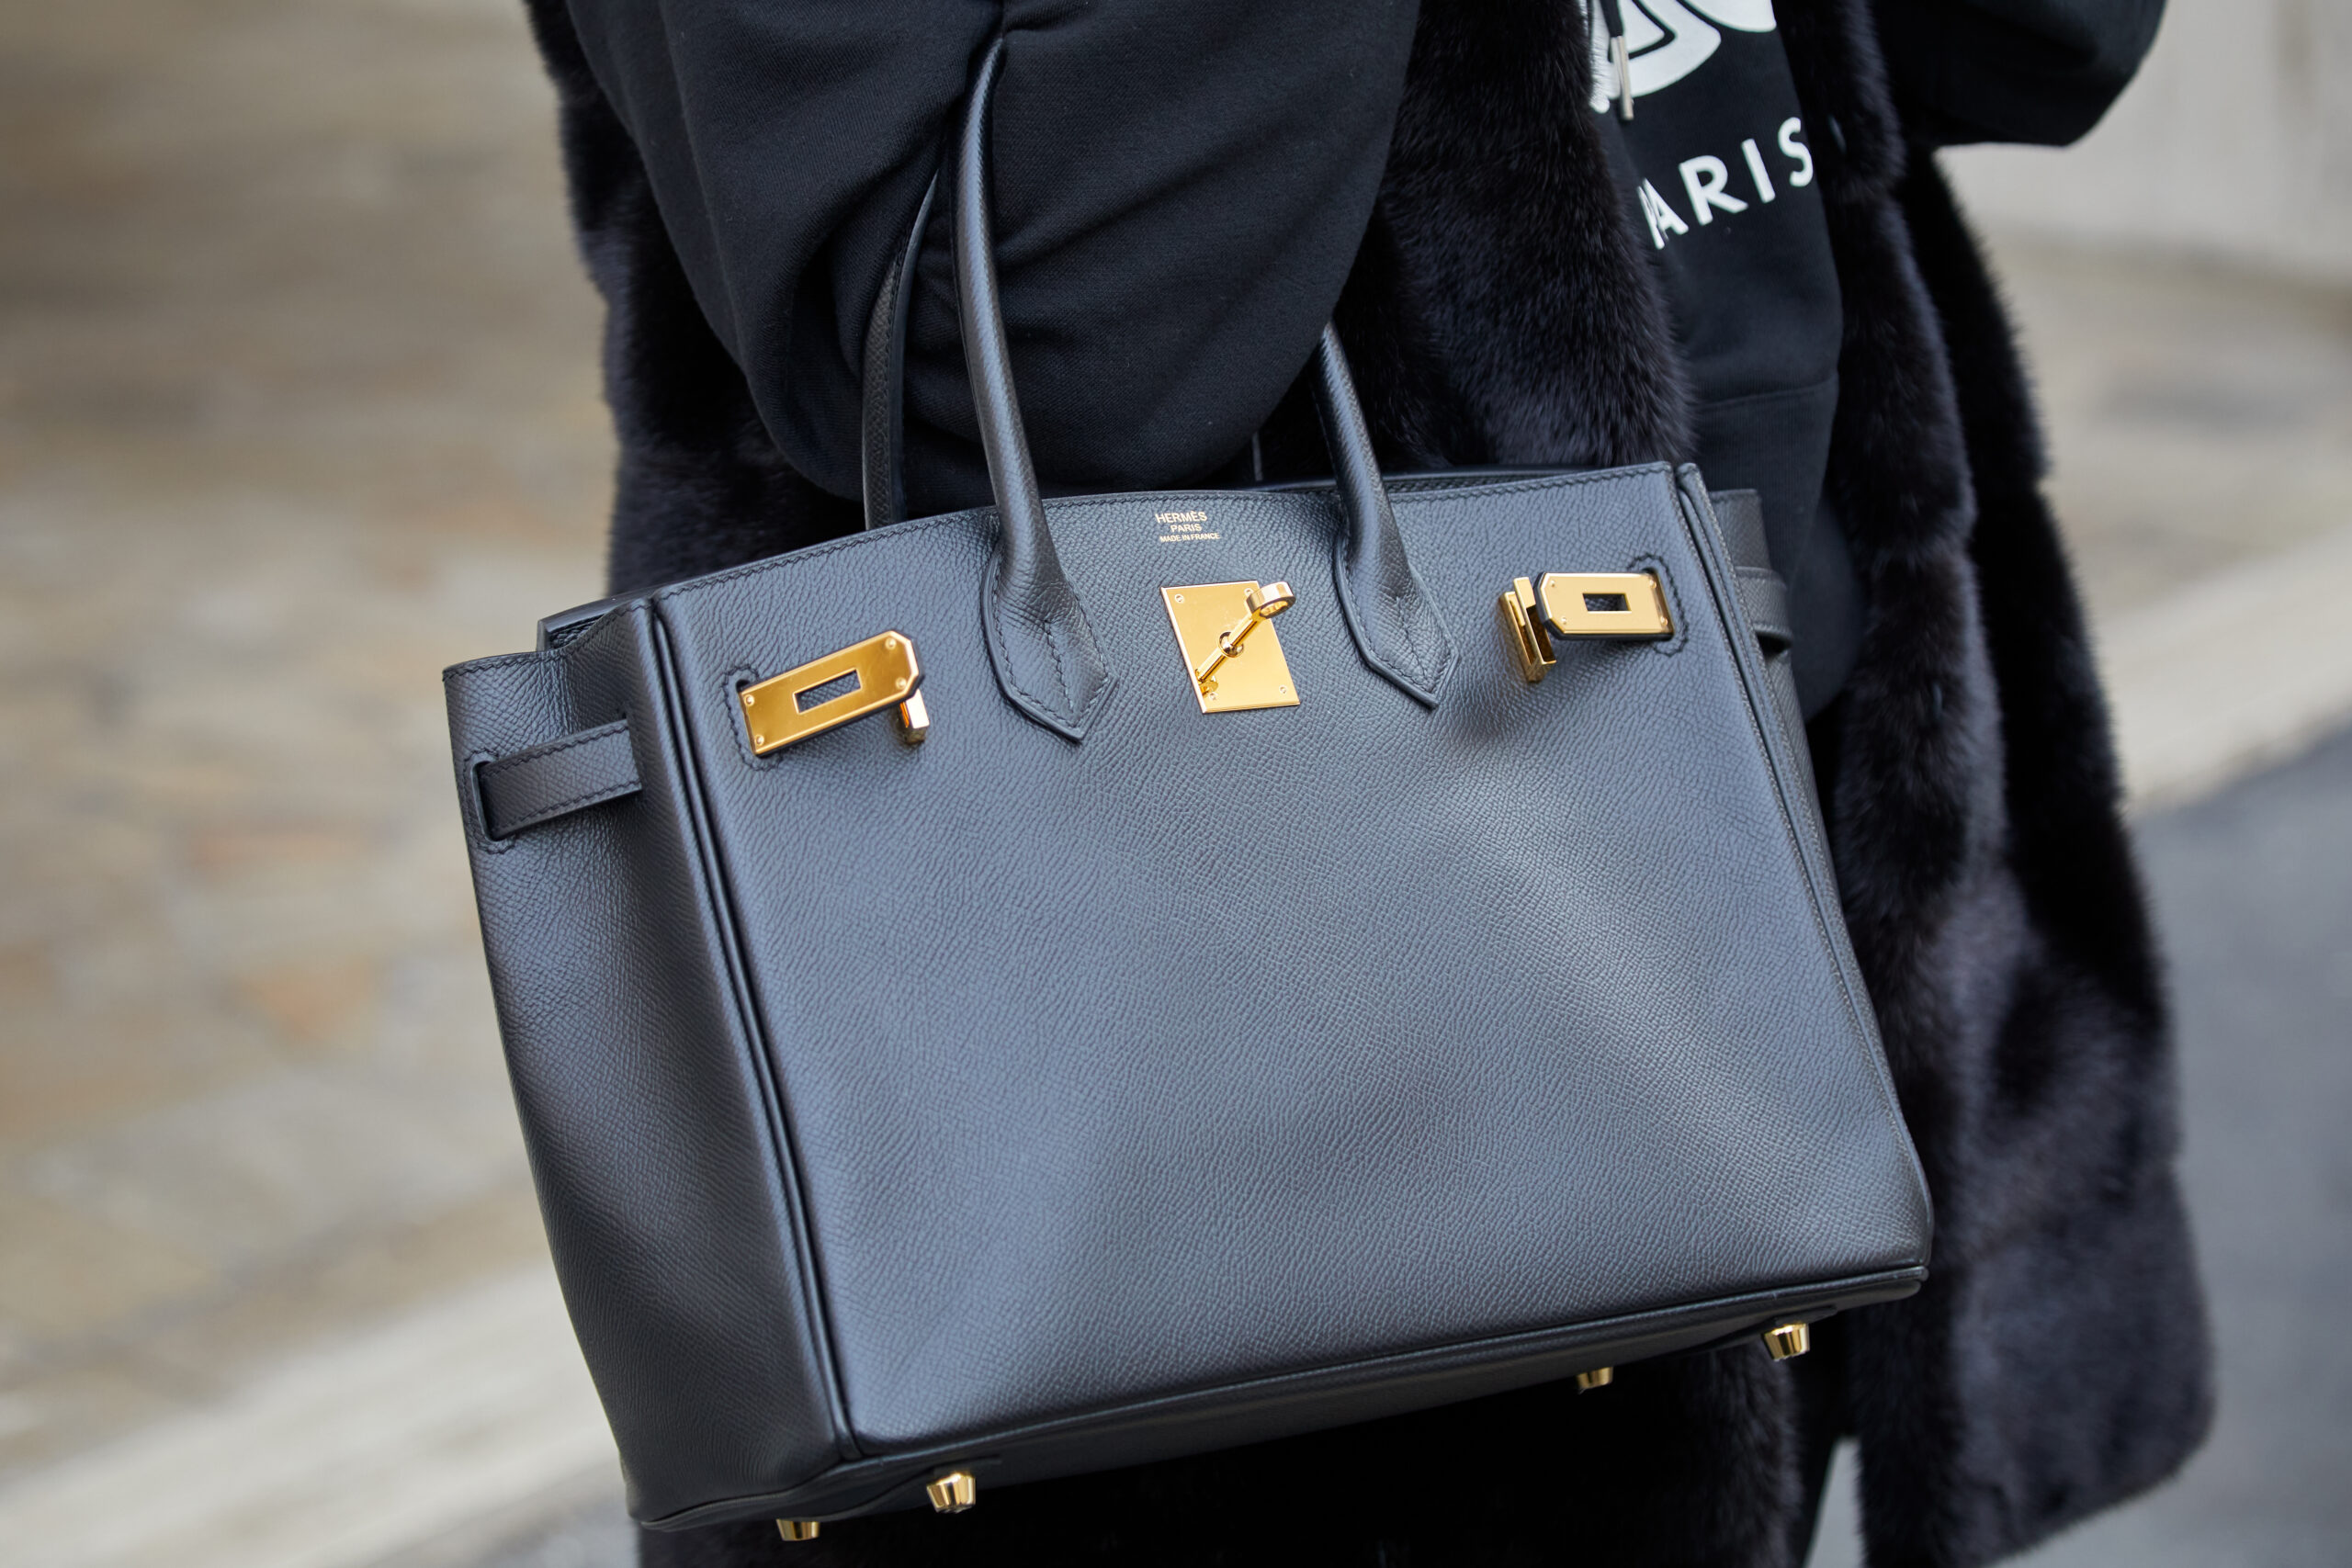 A stylish Hermès handbag, epitomizing brand desire, carried by a person on a city street.